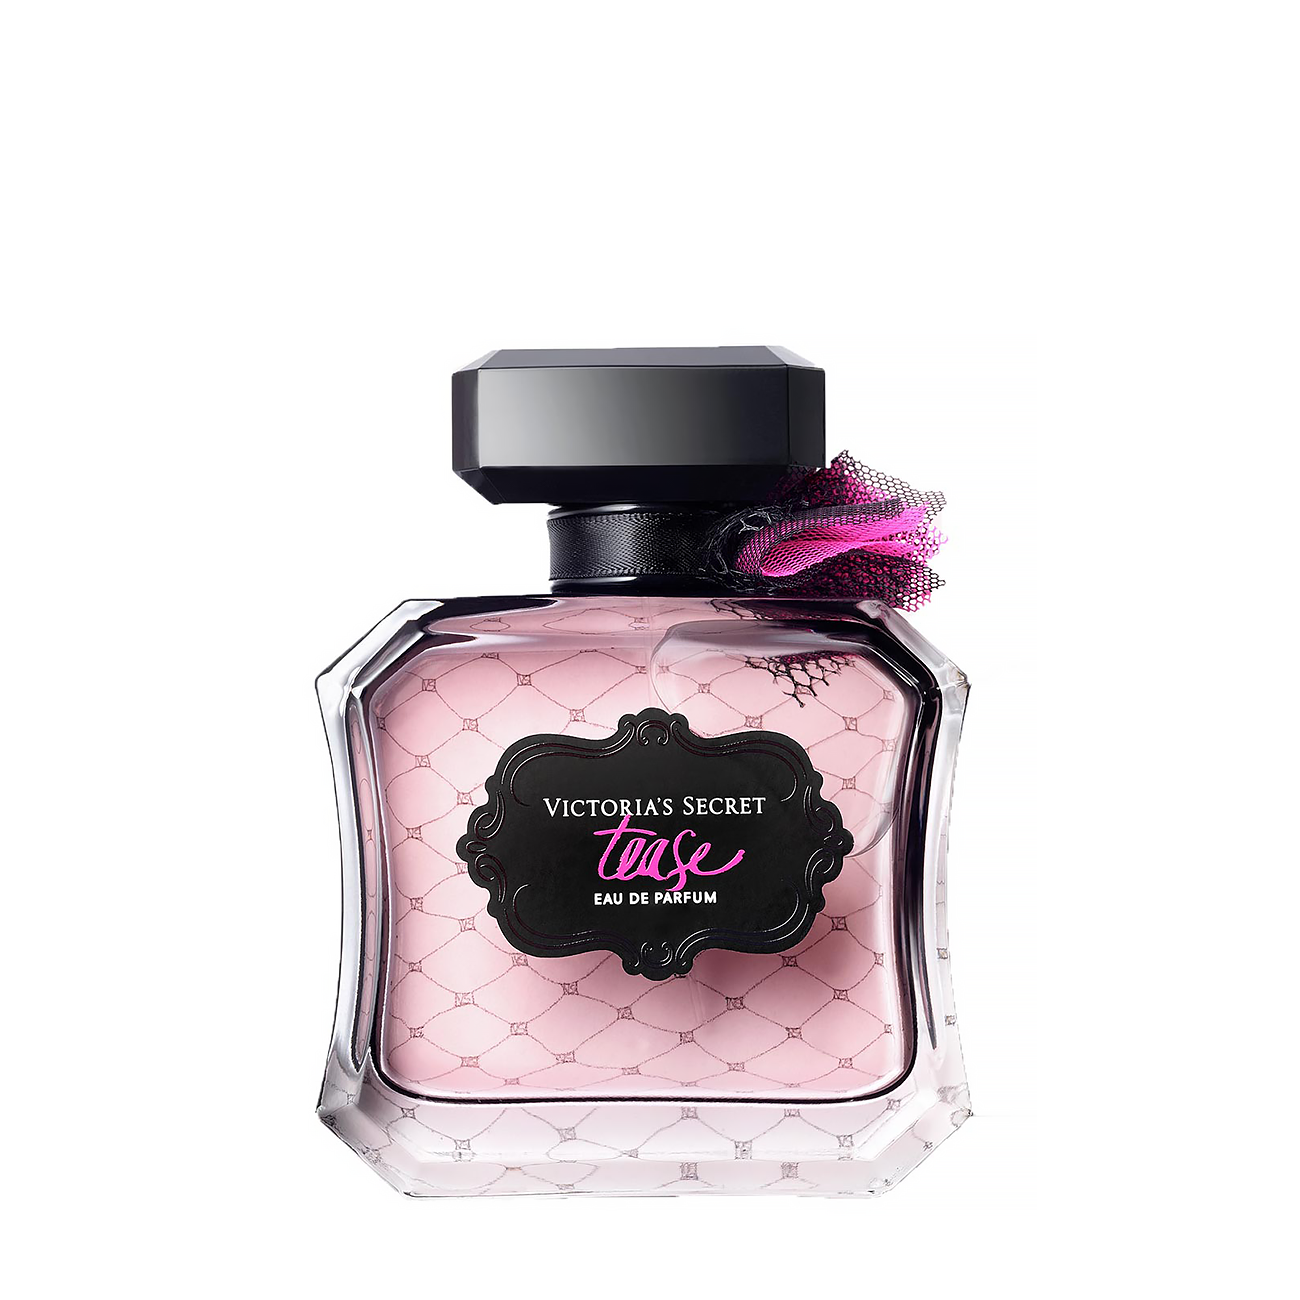 Apa de Parfum Victoria's Secret TEASE 50ml cu comanda online